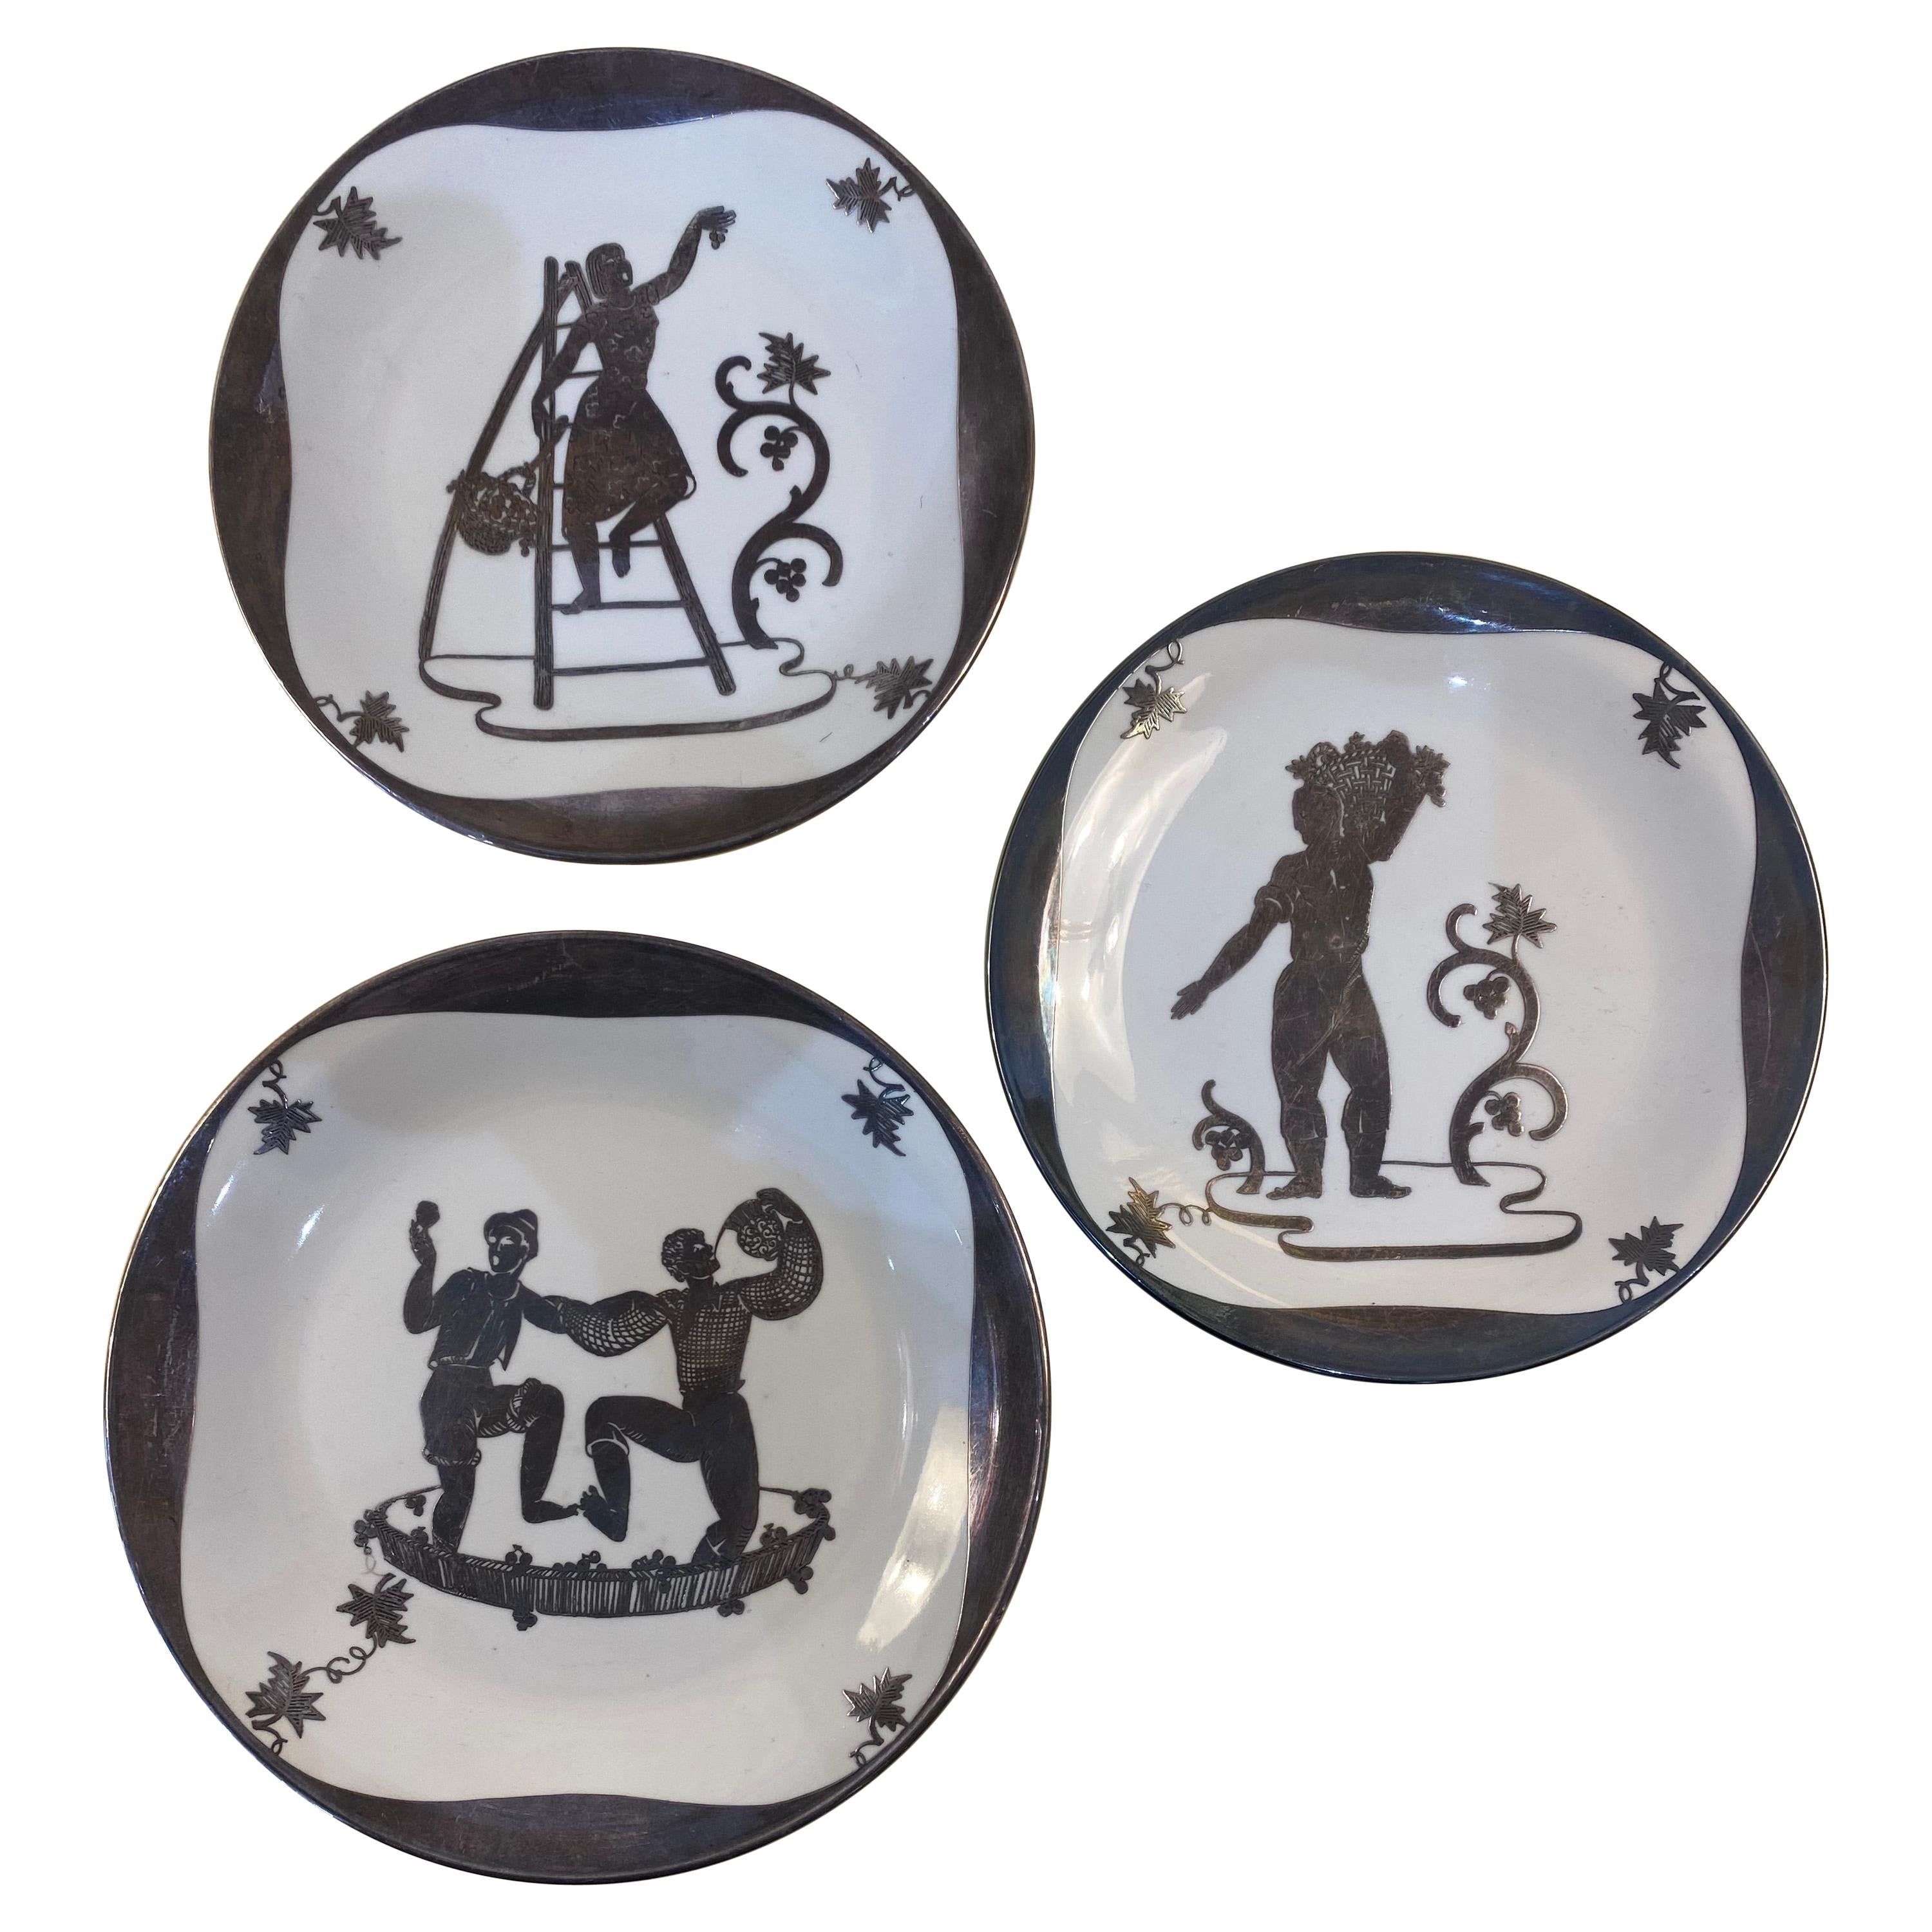 1940s, Gio Ponti for Richard Ginori, Set of 3 Ceramic Plates